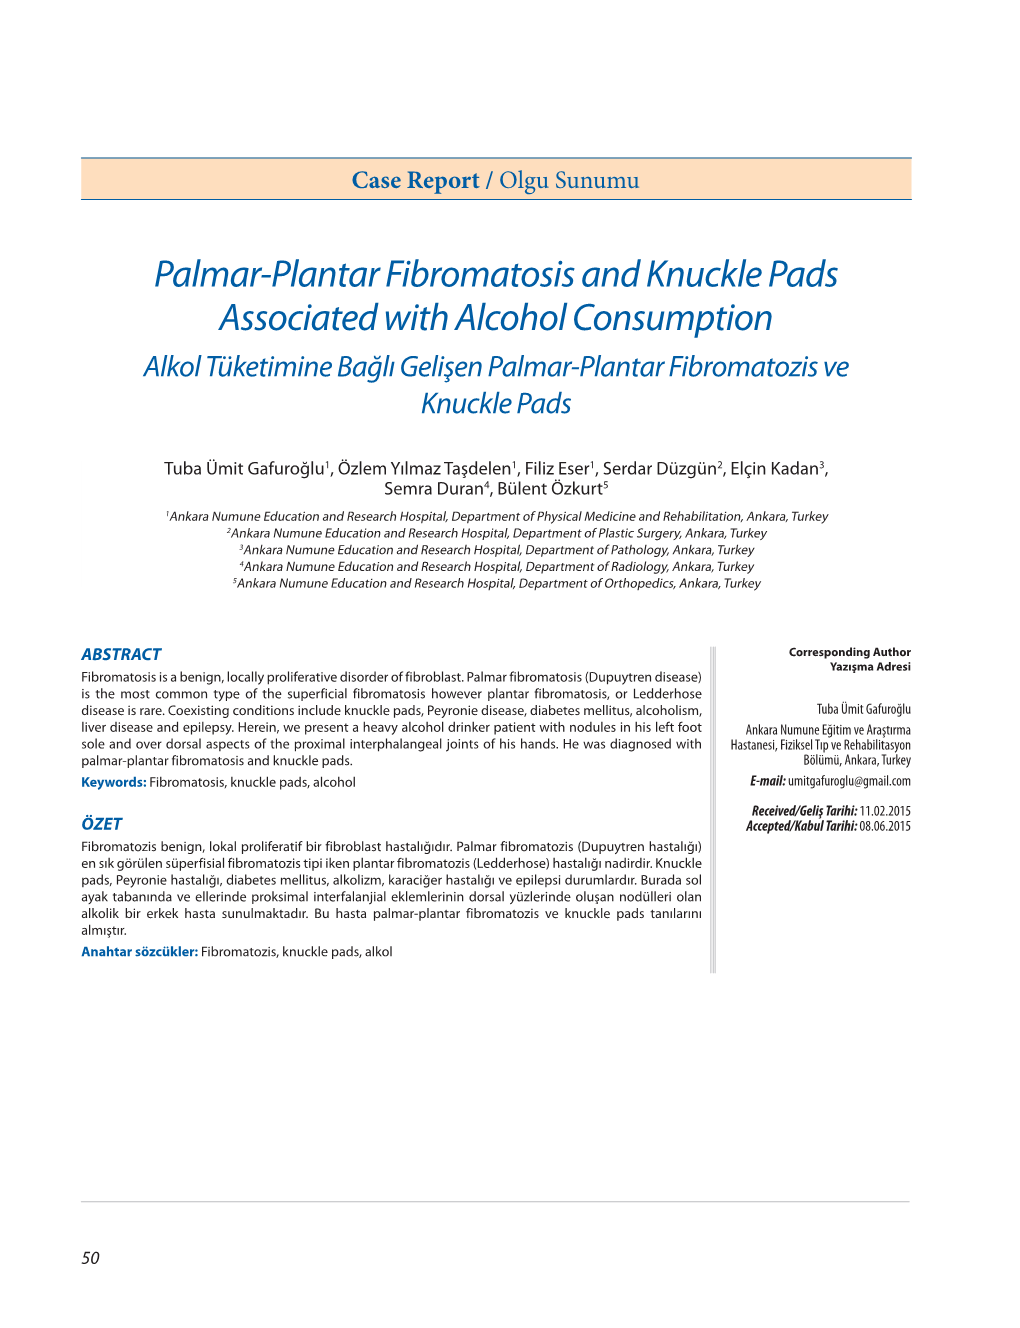 Palmar-Plantar Fibromatosis and Knuckle Pads Associated with Alcohol Consumption Alkol Tüketimine Bağlı Gelişen Palmar-Plantar Fibromatozis Ve Knuckle Pads